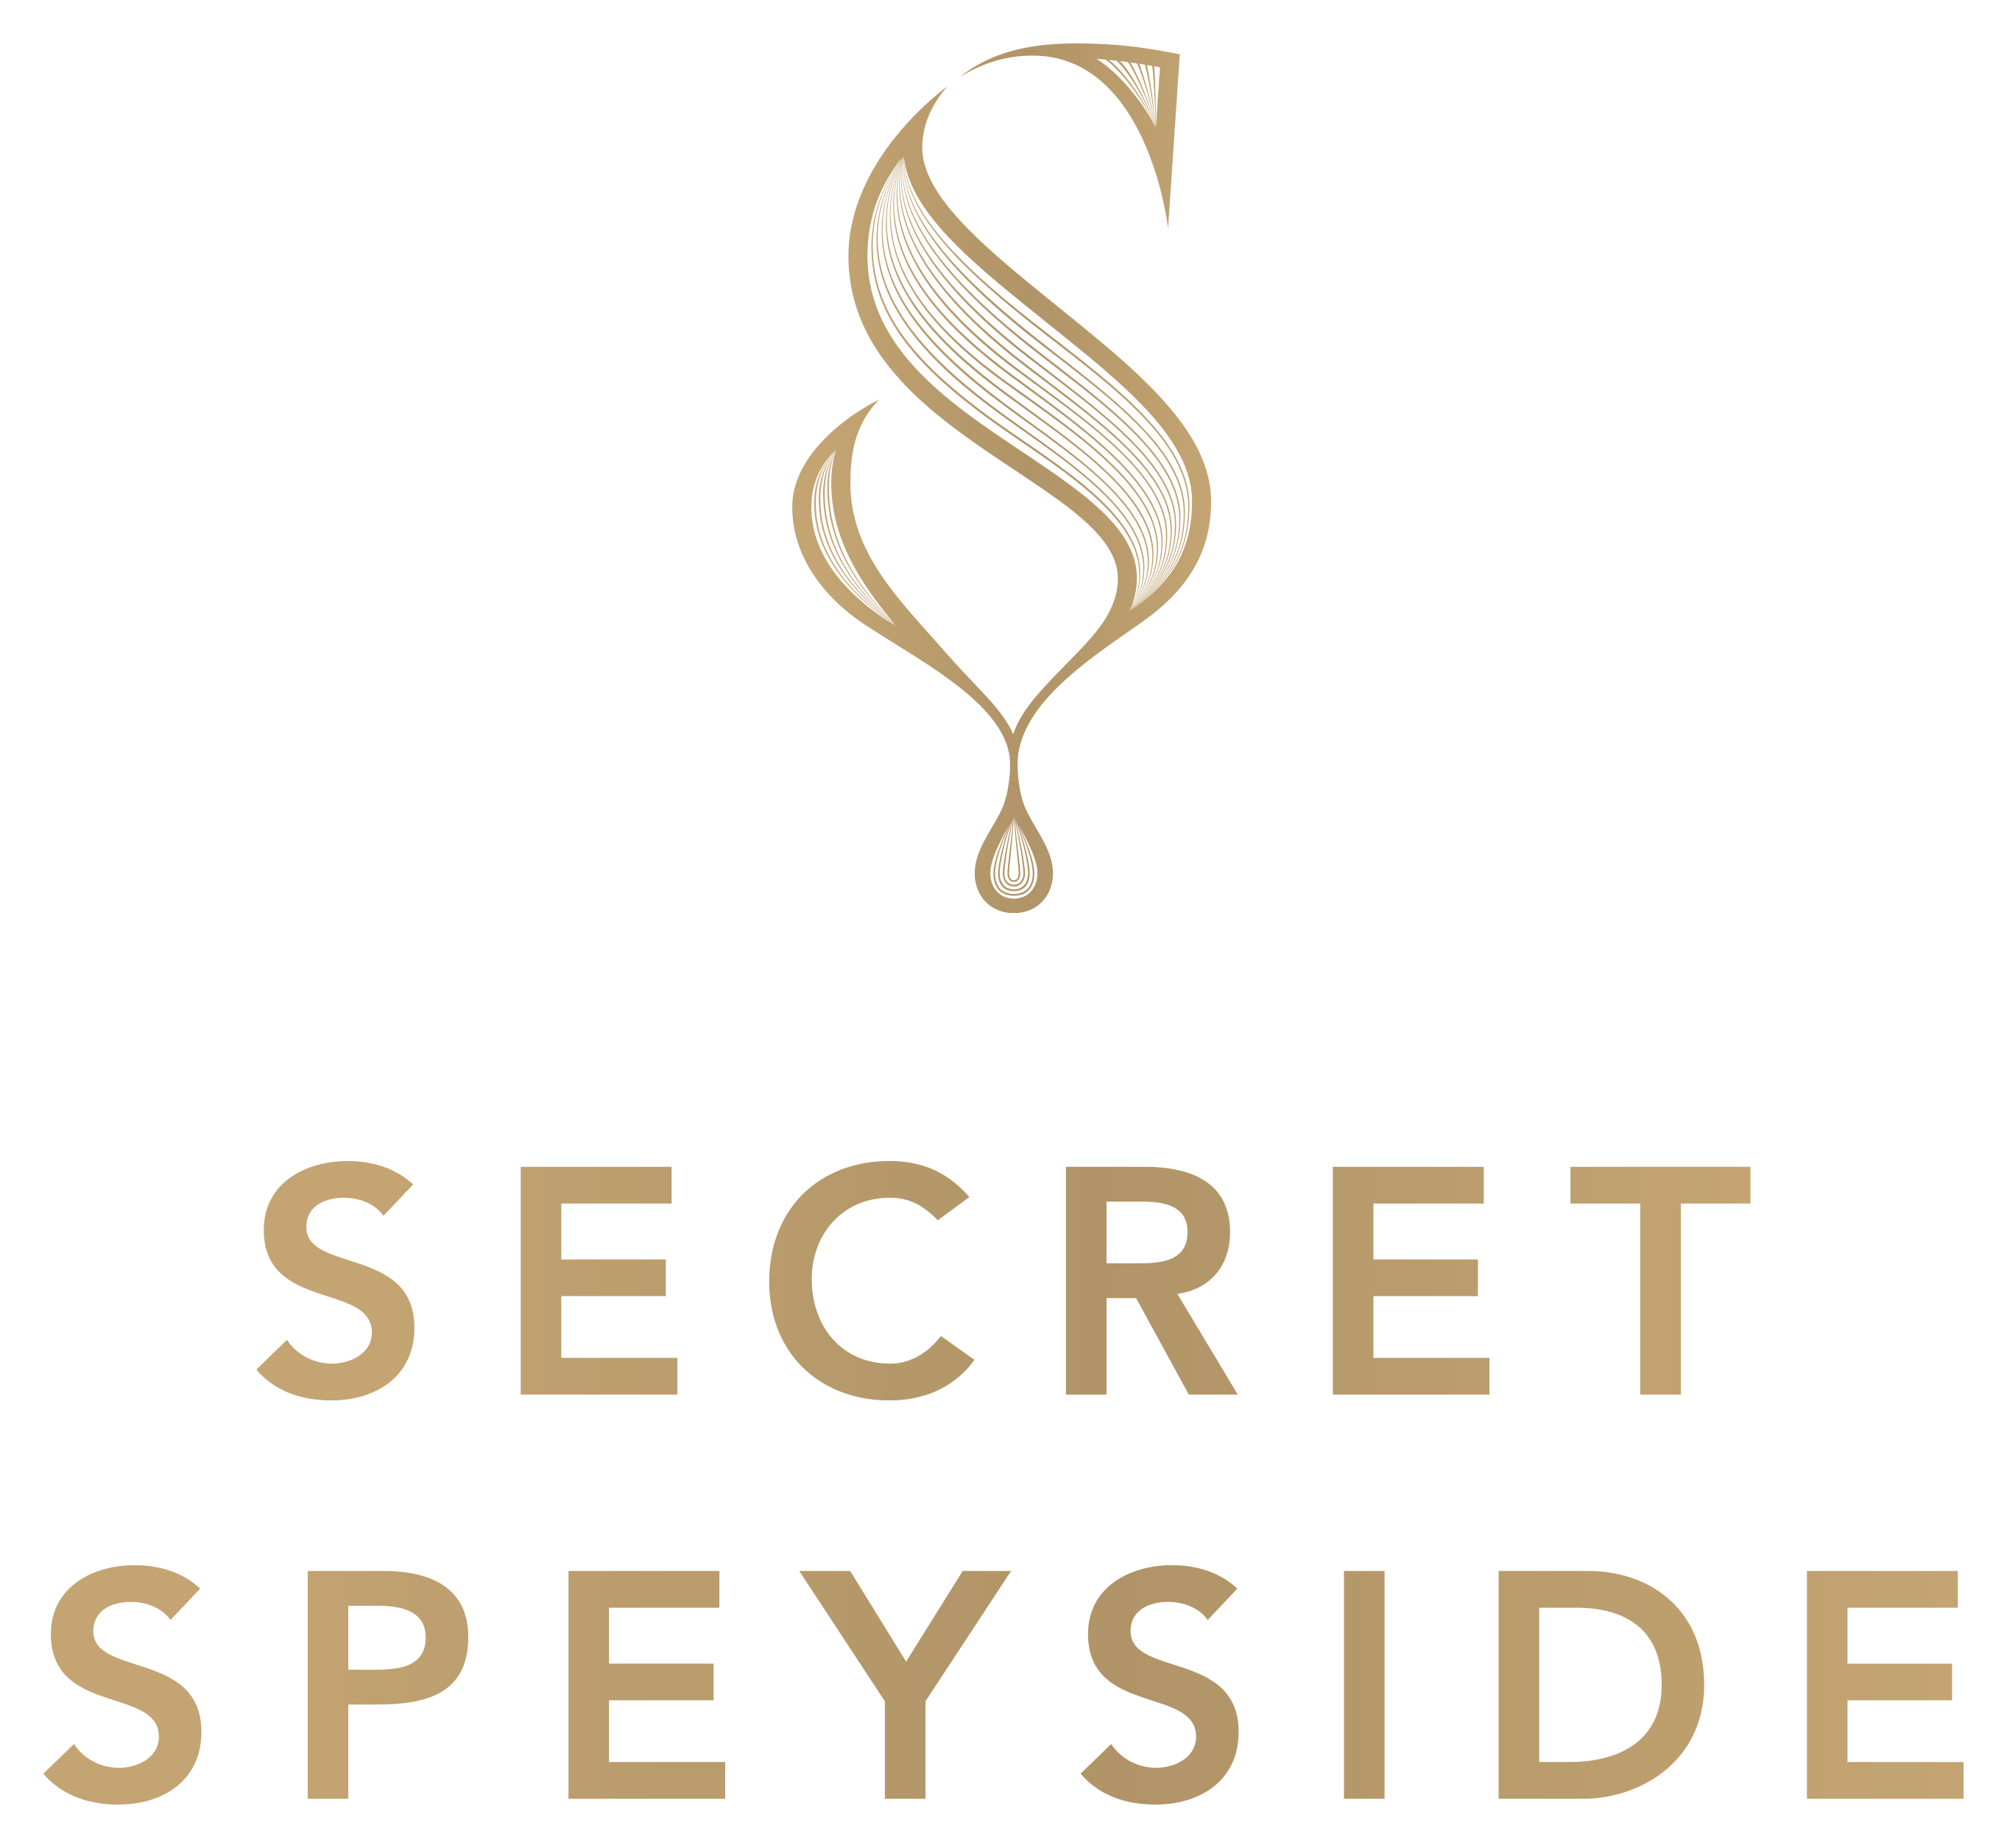 Secret Speyside